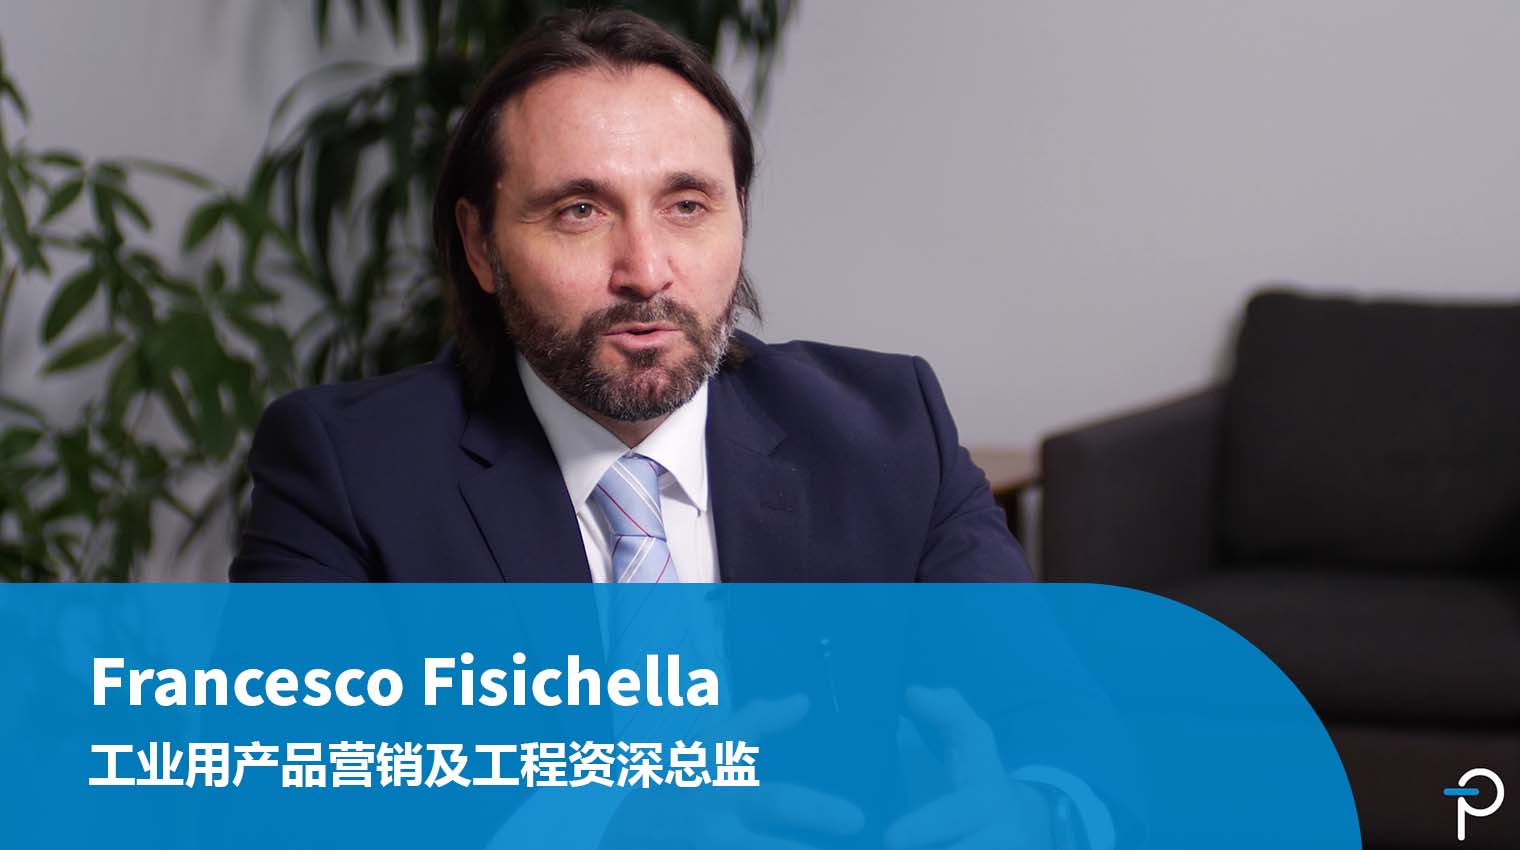 Francesco Fisichella - 工业用产品营销及工程总监